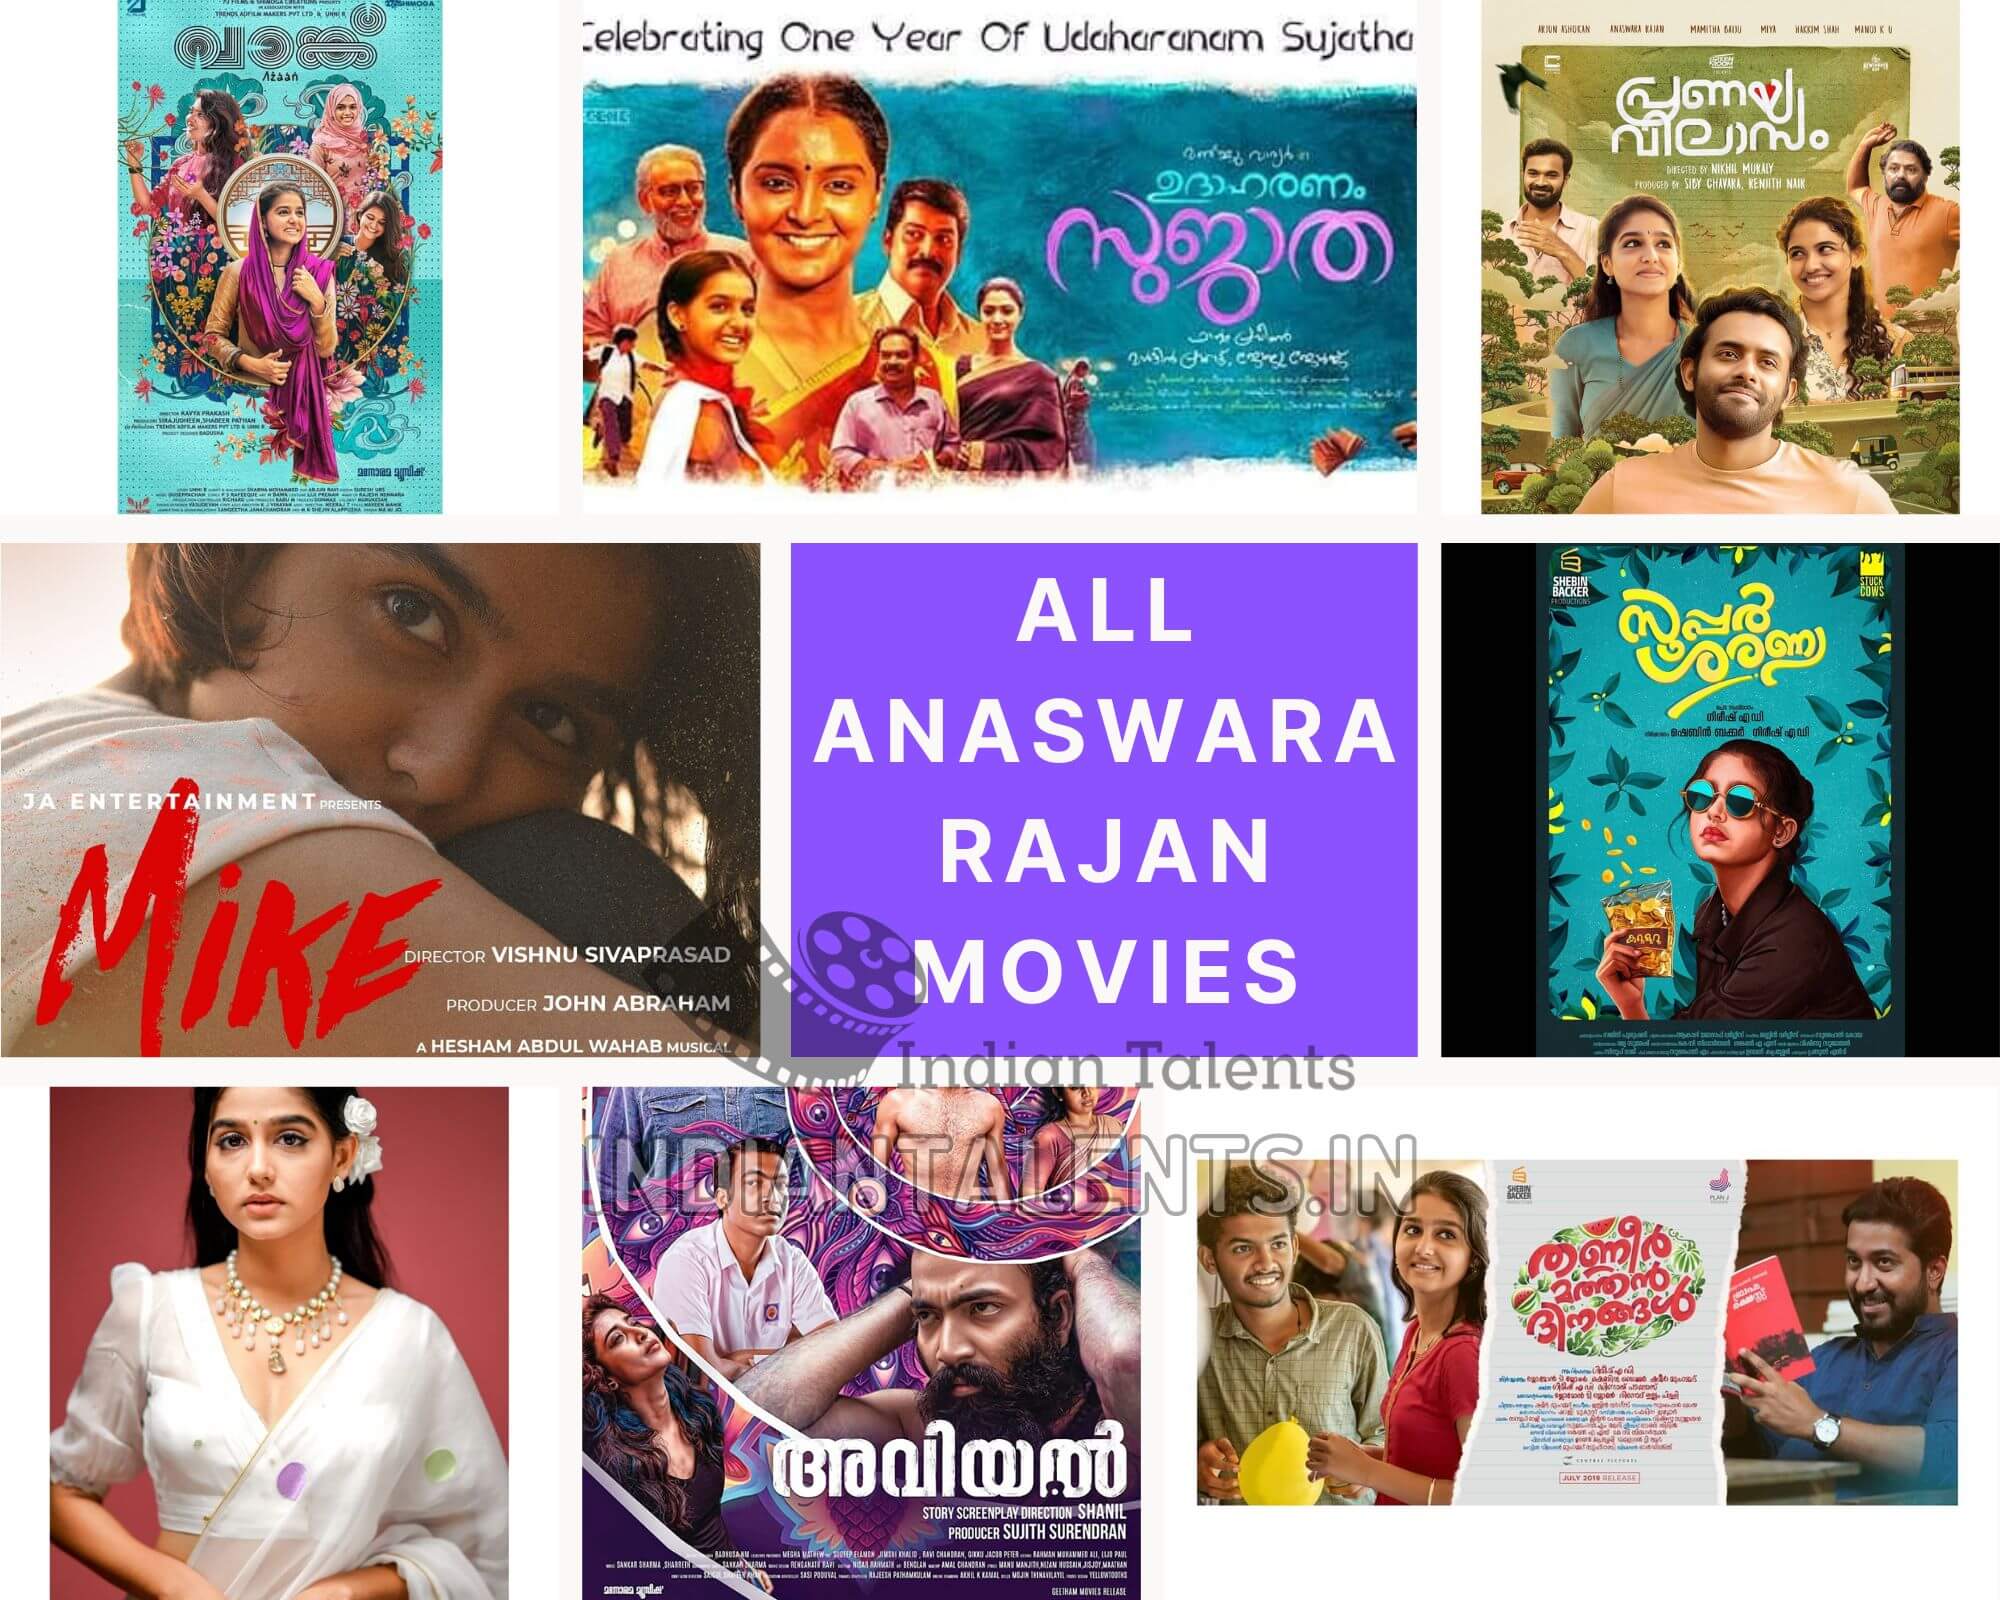 All Anaswara Rajan Movies